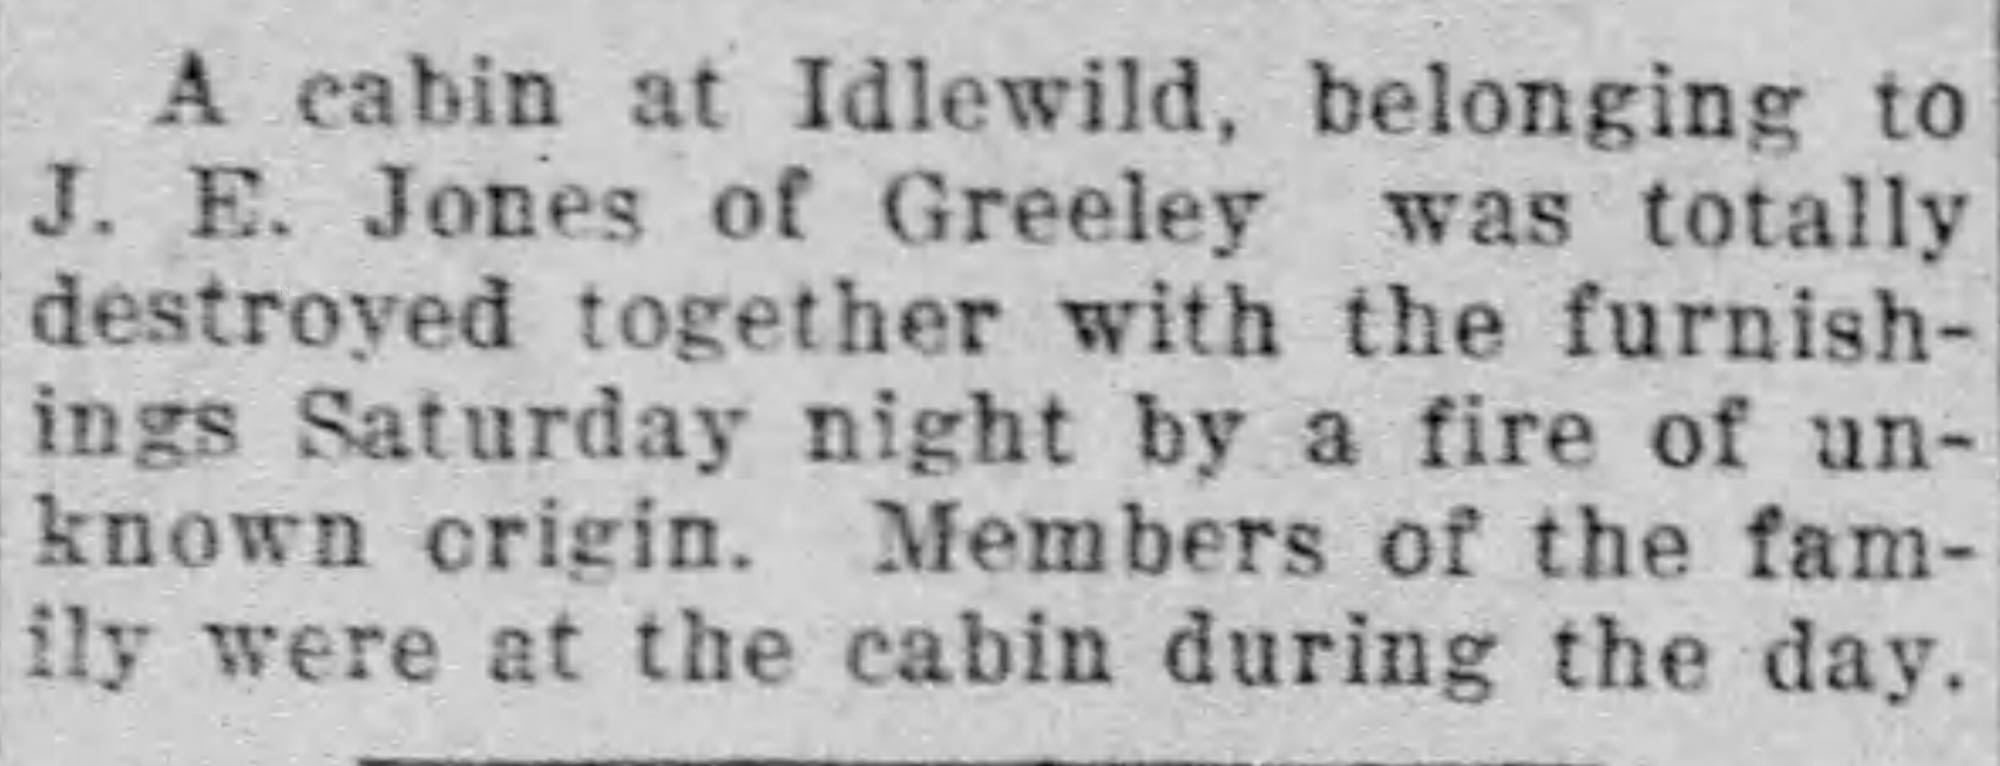 Idlewild Lodge - idlewildlodge.github.io - 1923-02-27 - The Fort Collins Courier - John Jones Cabin Fire